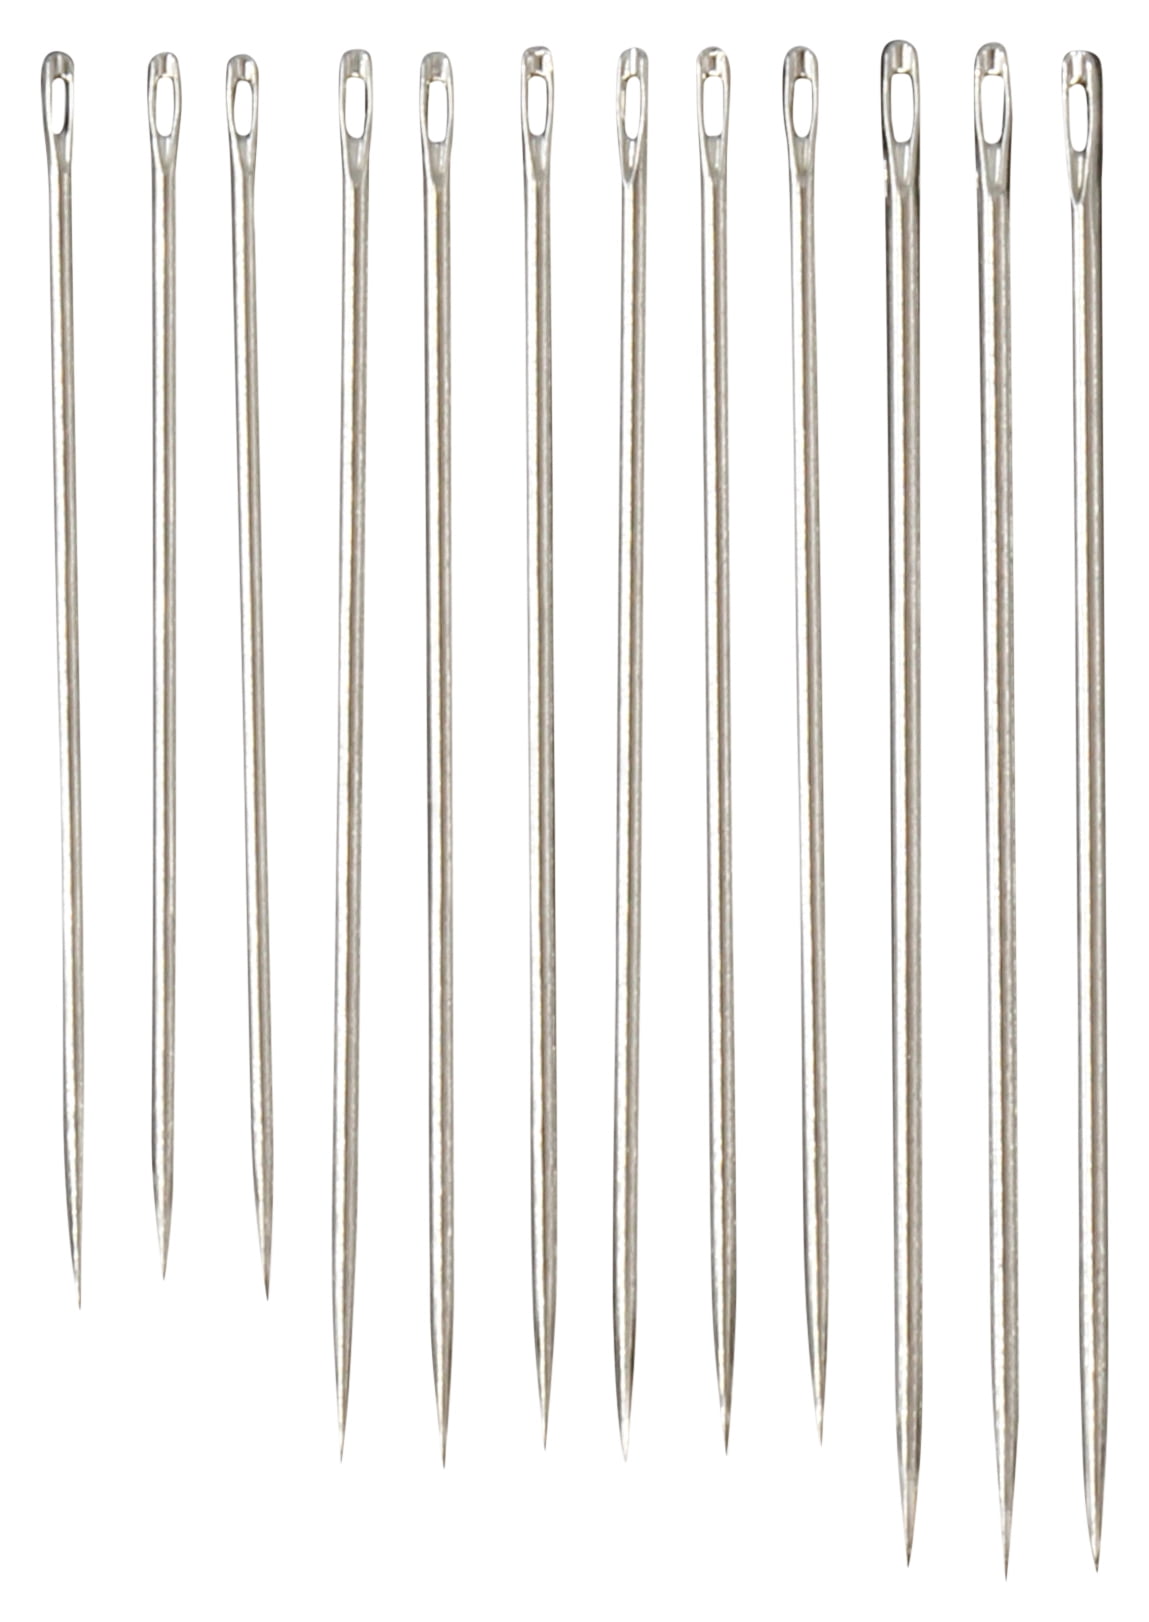 Dritz Curved Handle Needle Assortment